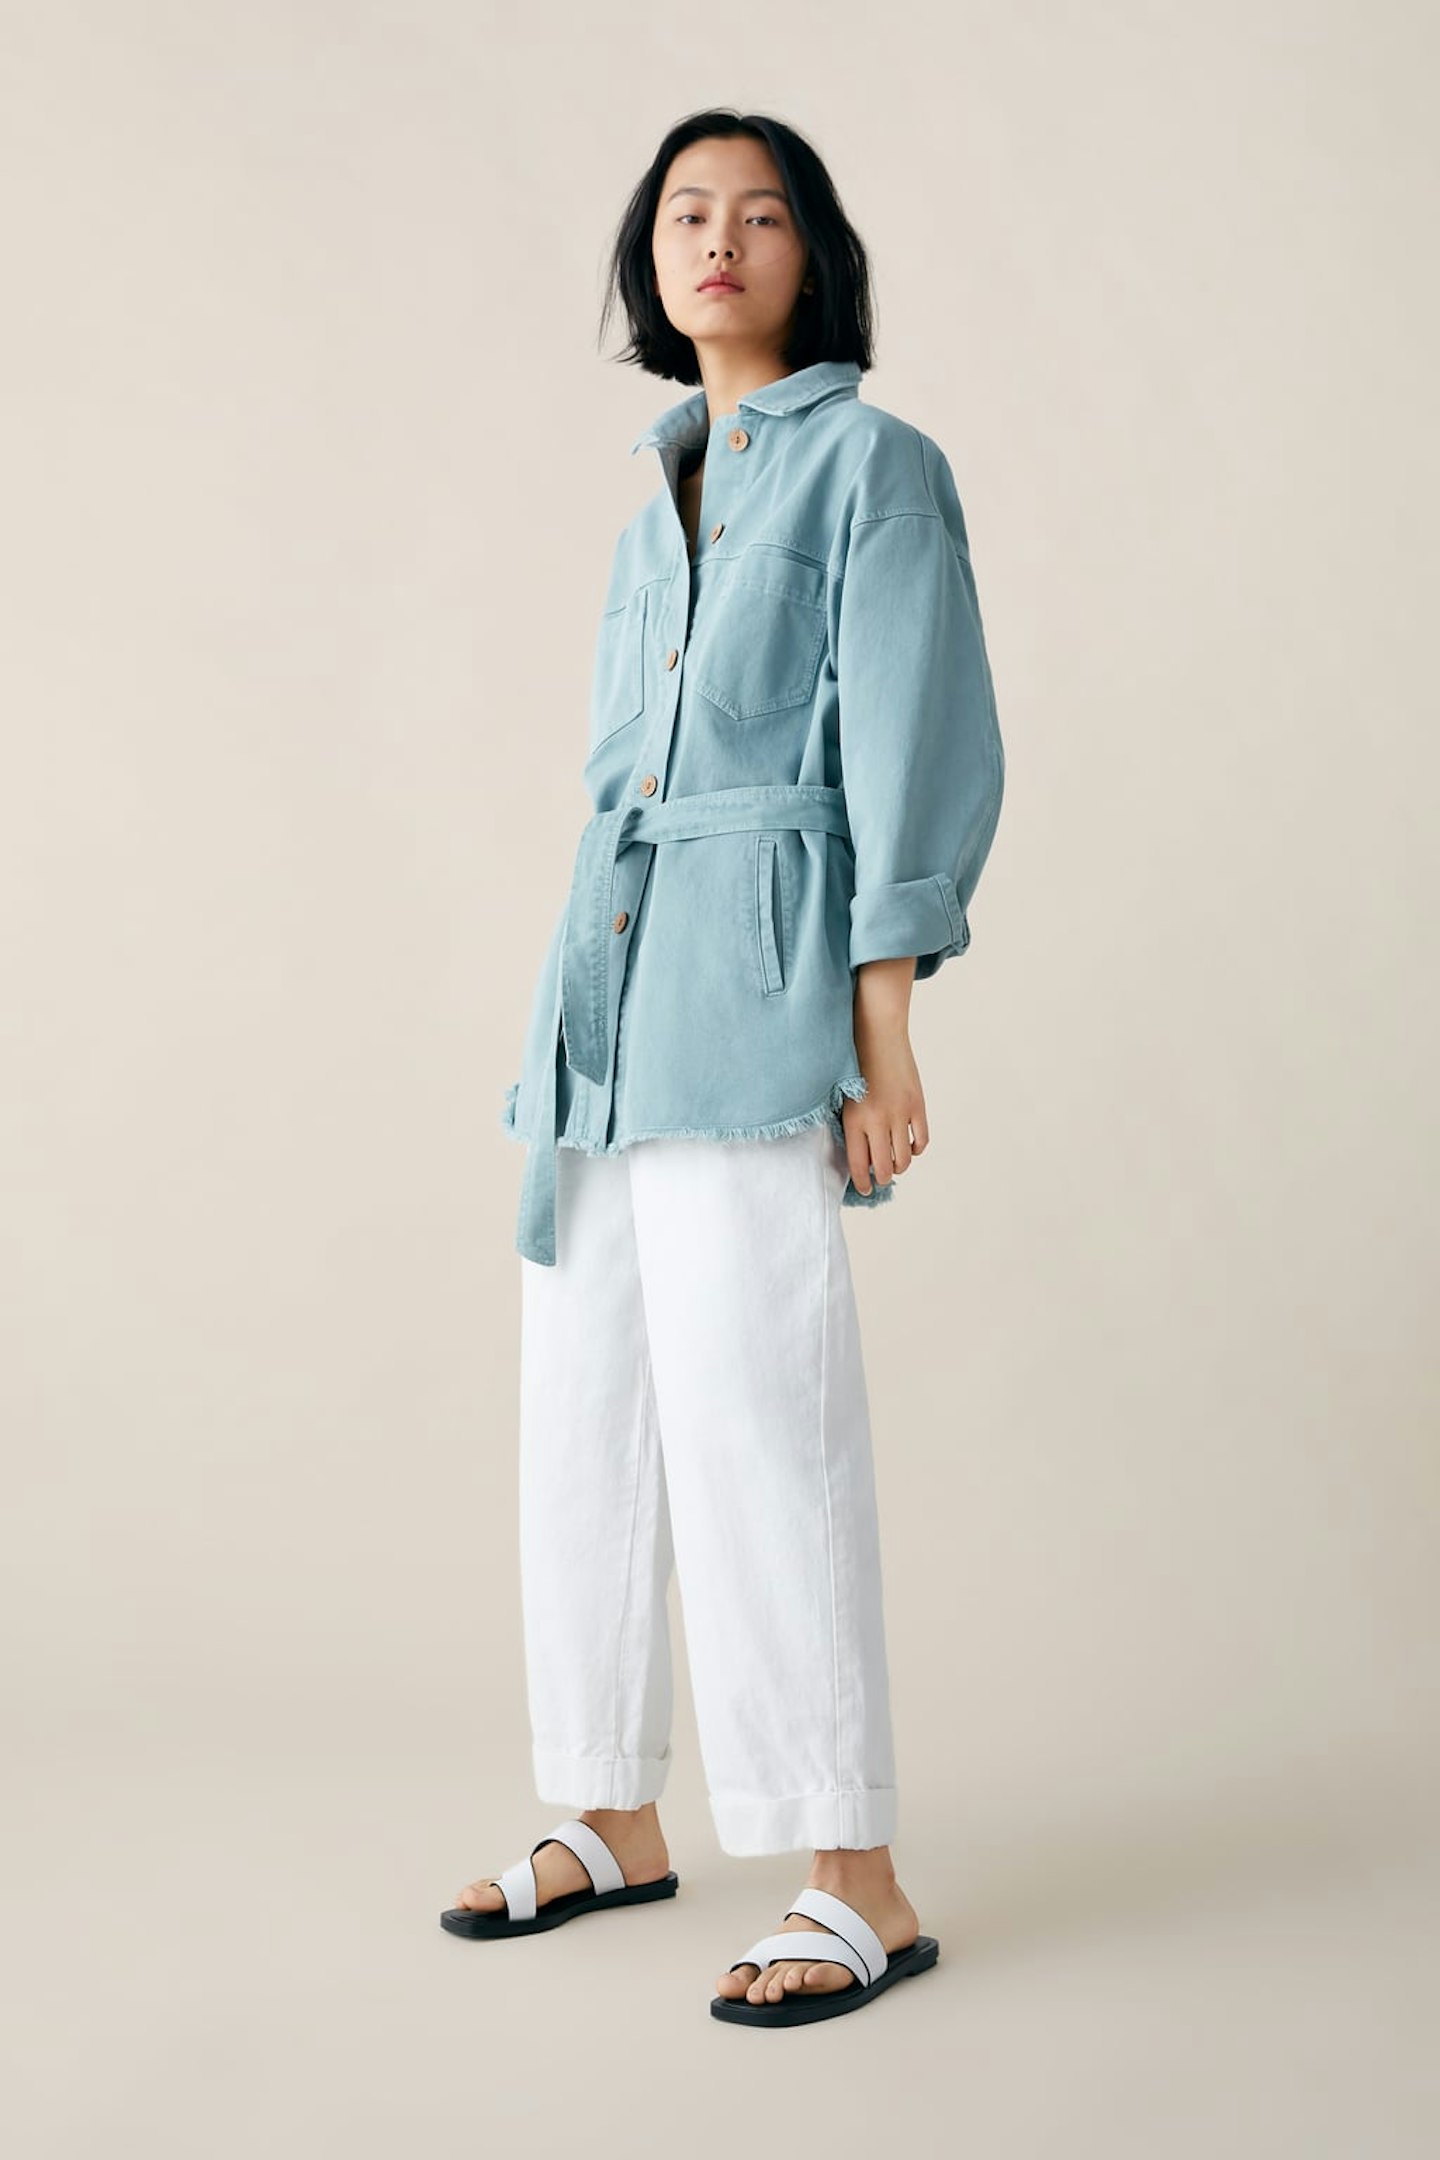 Zara, Blue Belted Jacket, £49.99